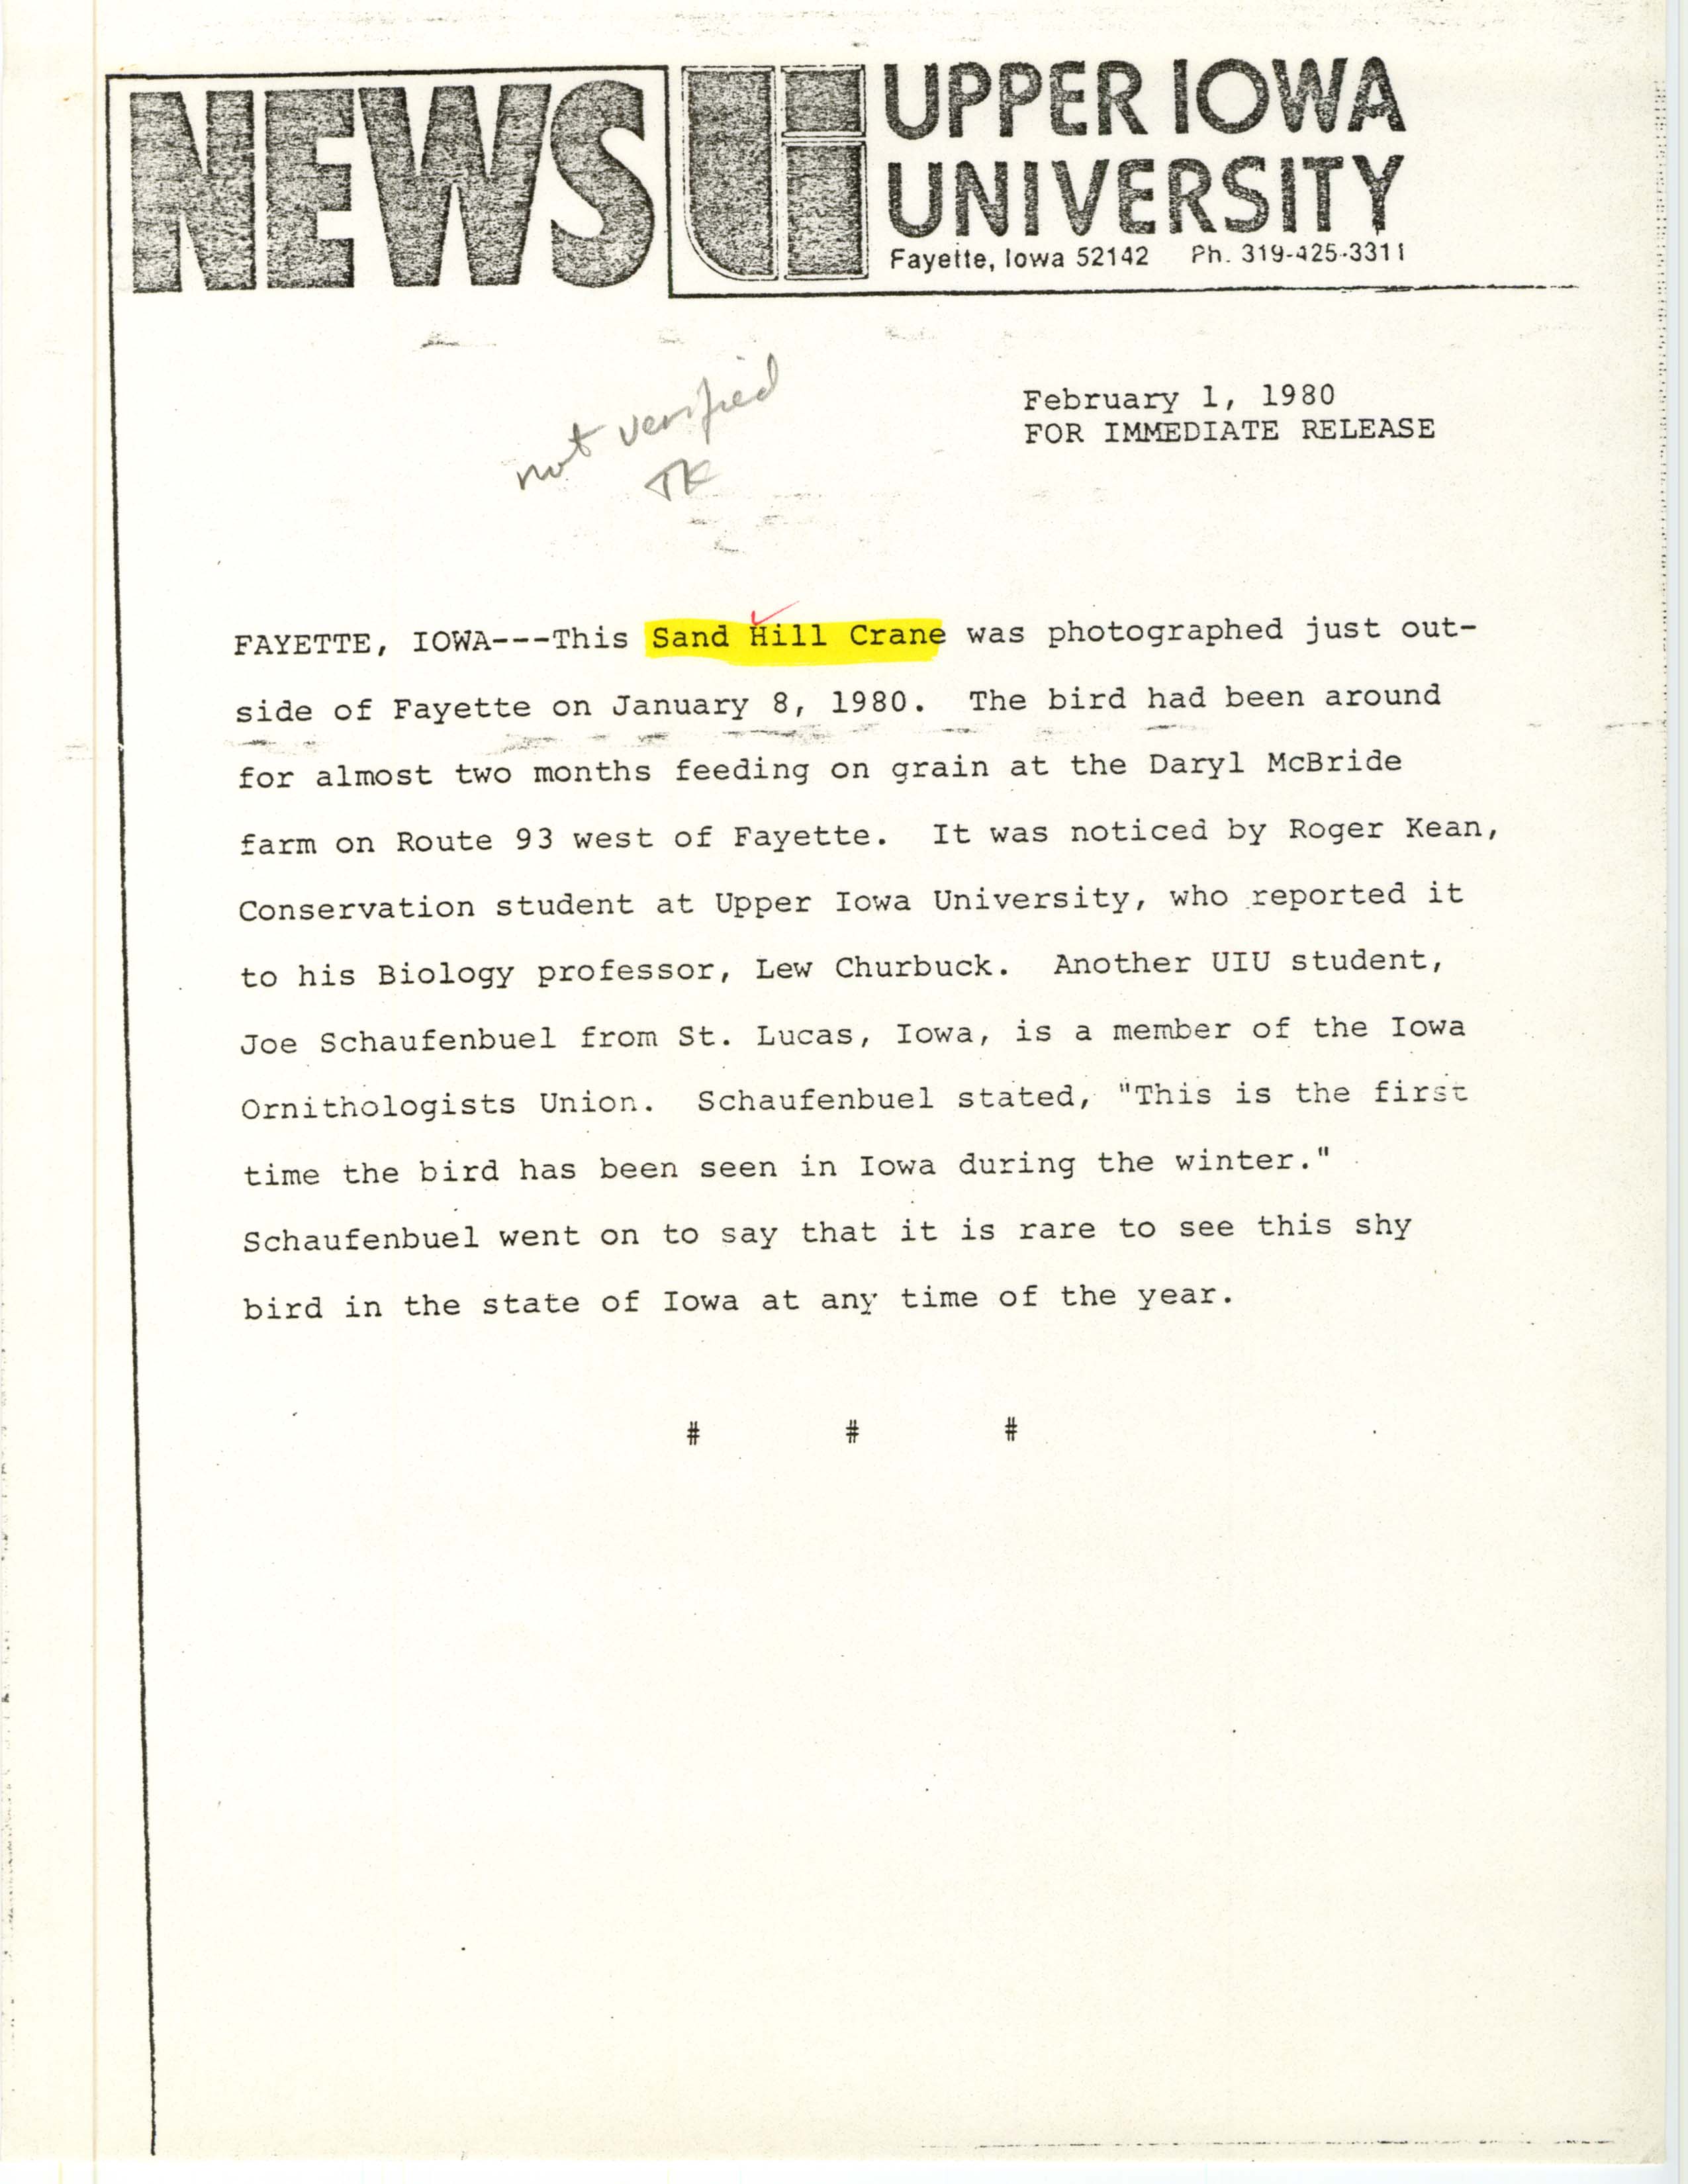 Press release for rare bird sighting for Sand Hill Crane near Fayette, 1980